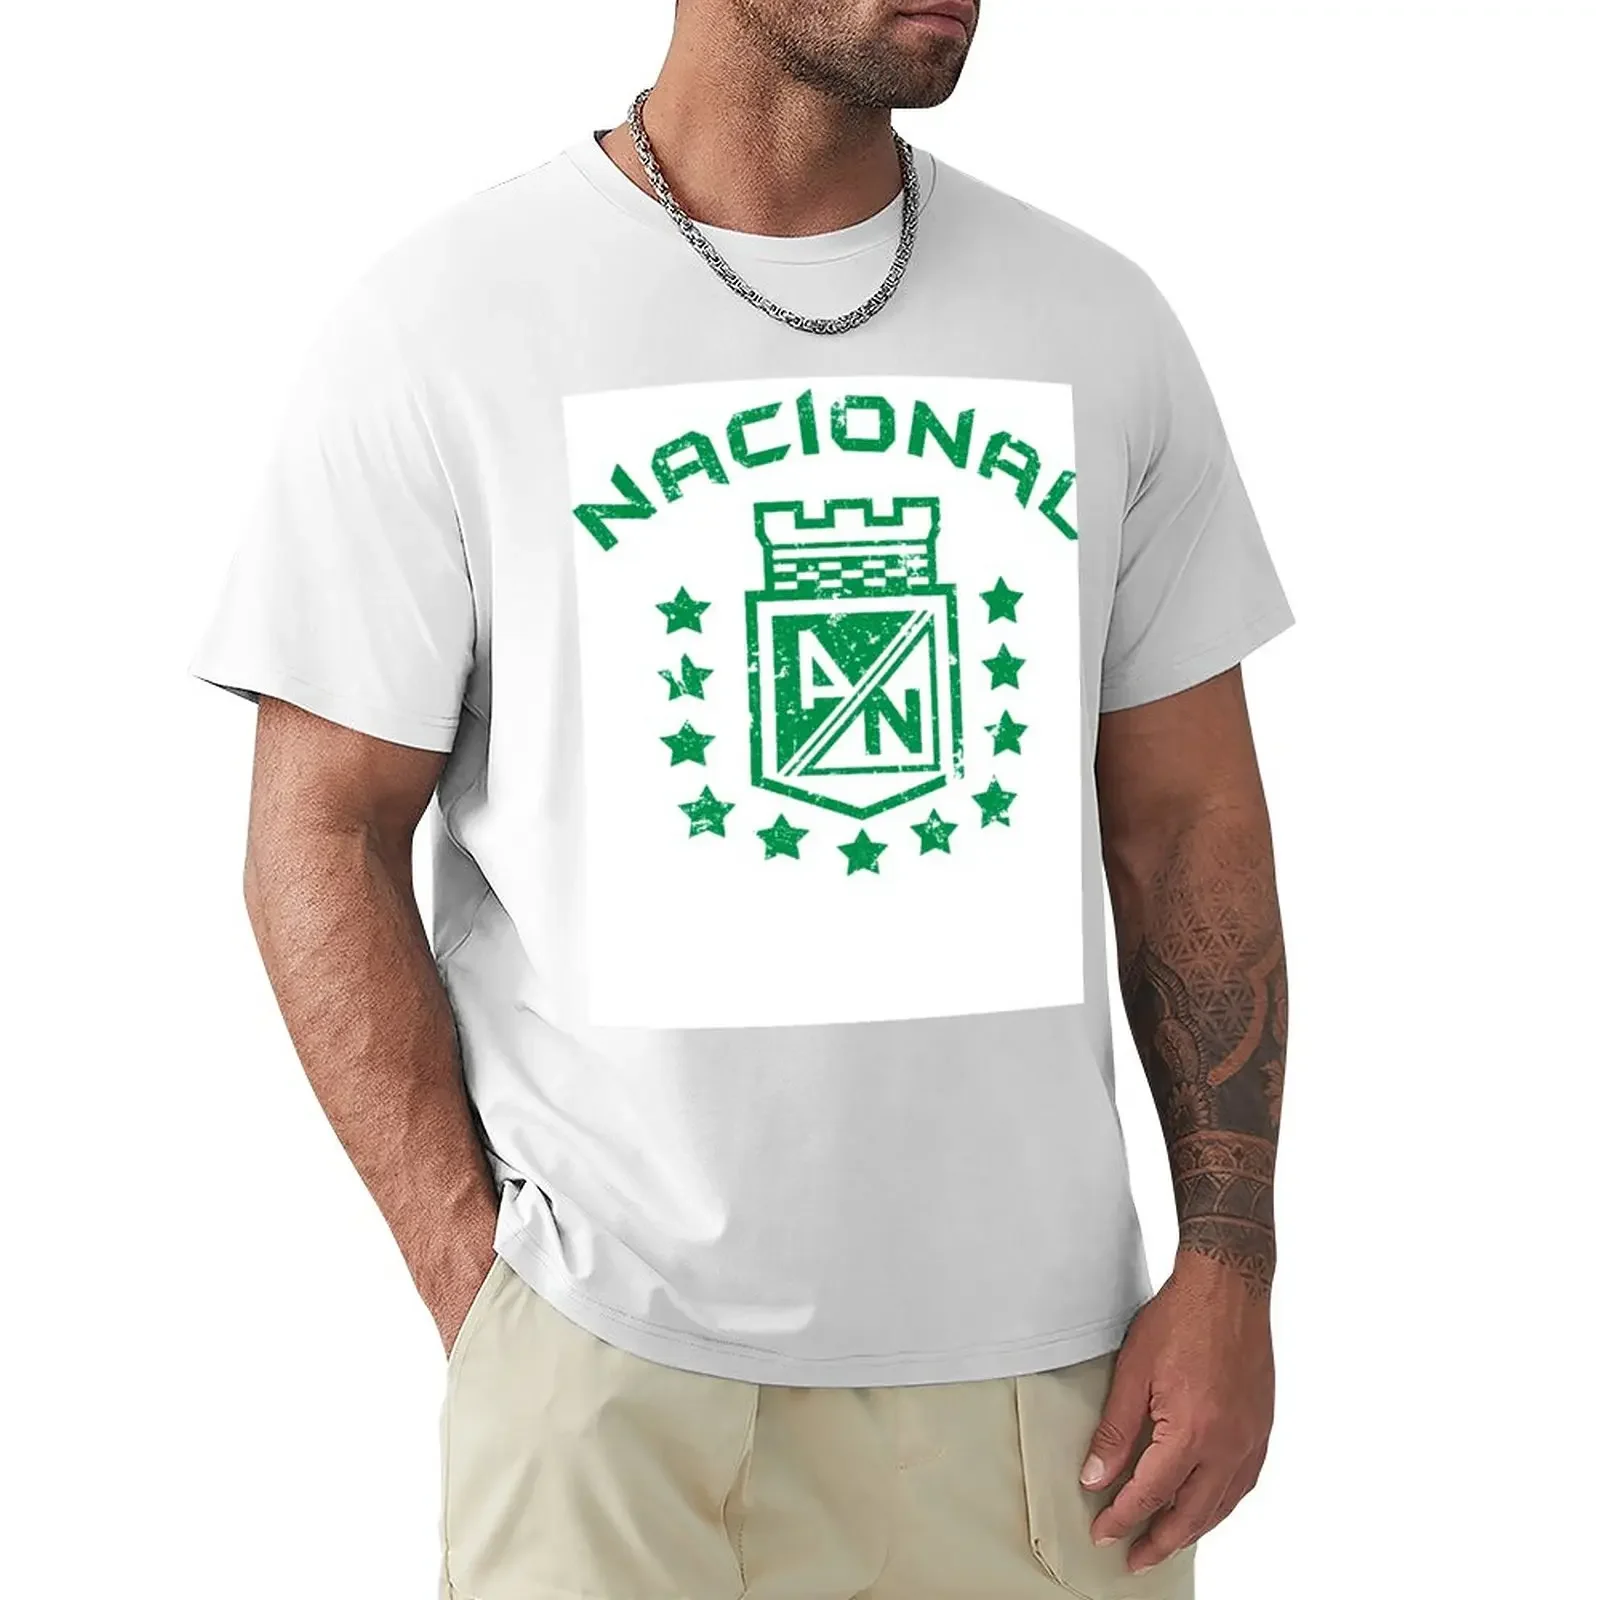 

Atletico Nacional Medellin Colombia Camiseta Tshirt futbol T-Shirt tees kawaii clothes mens graphic t-shirts pack